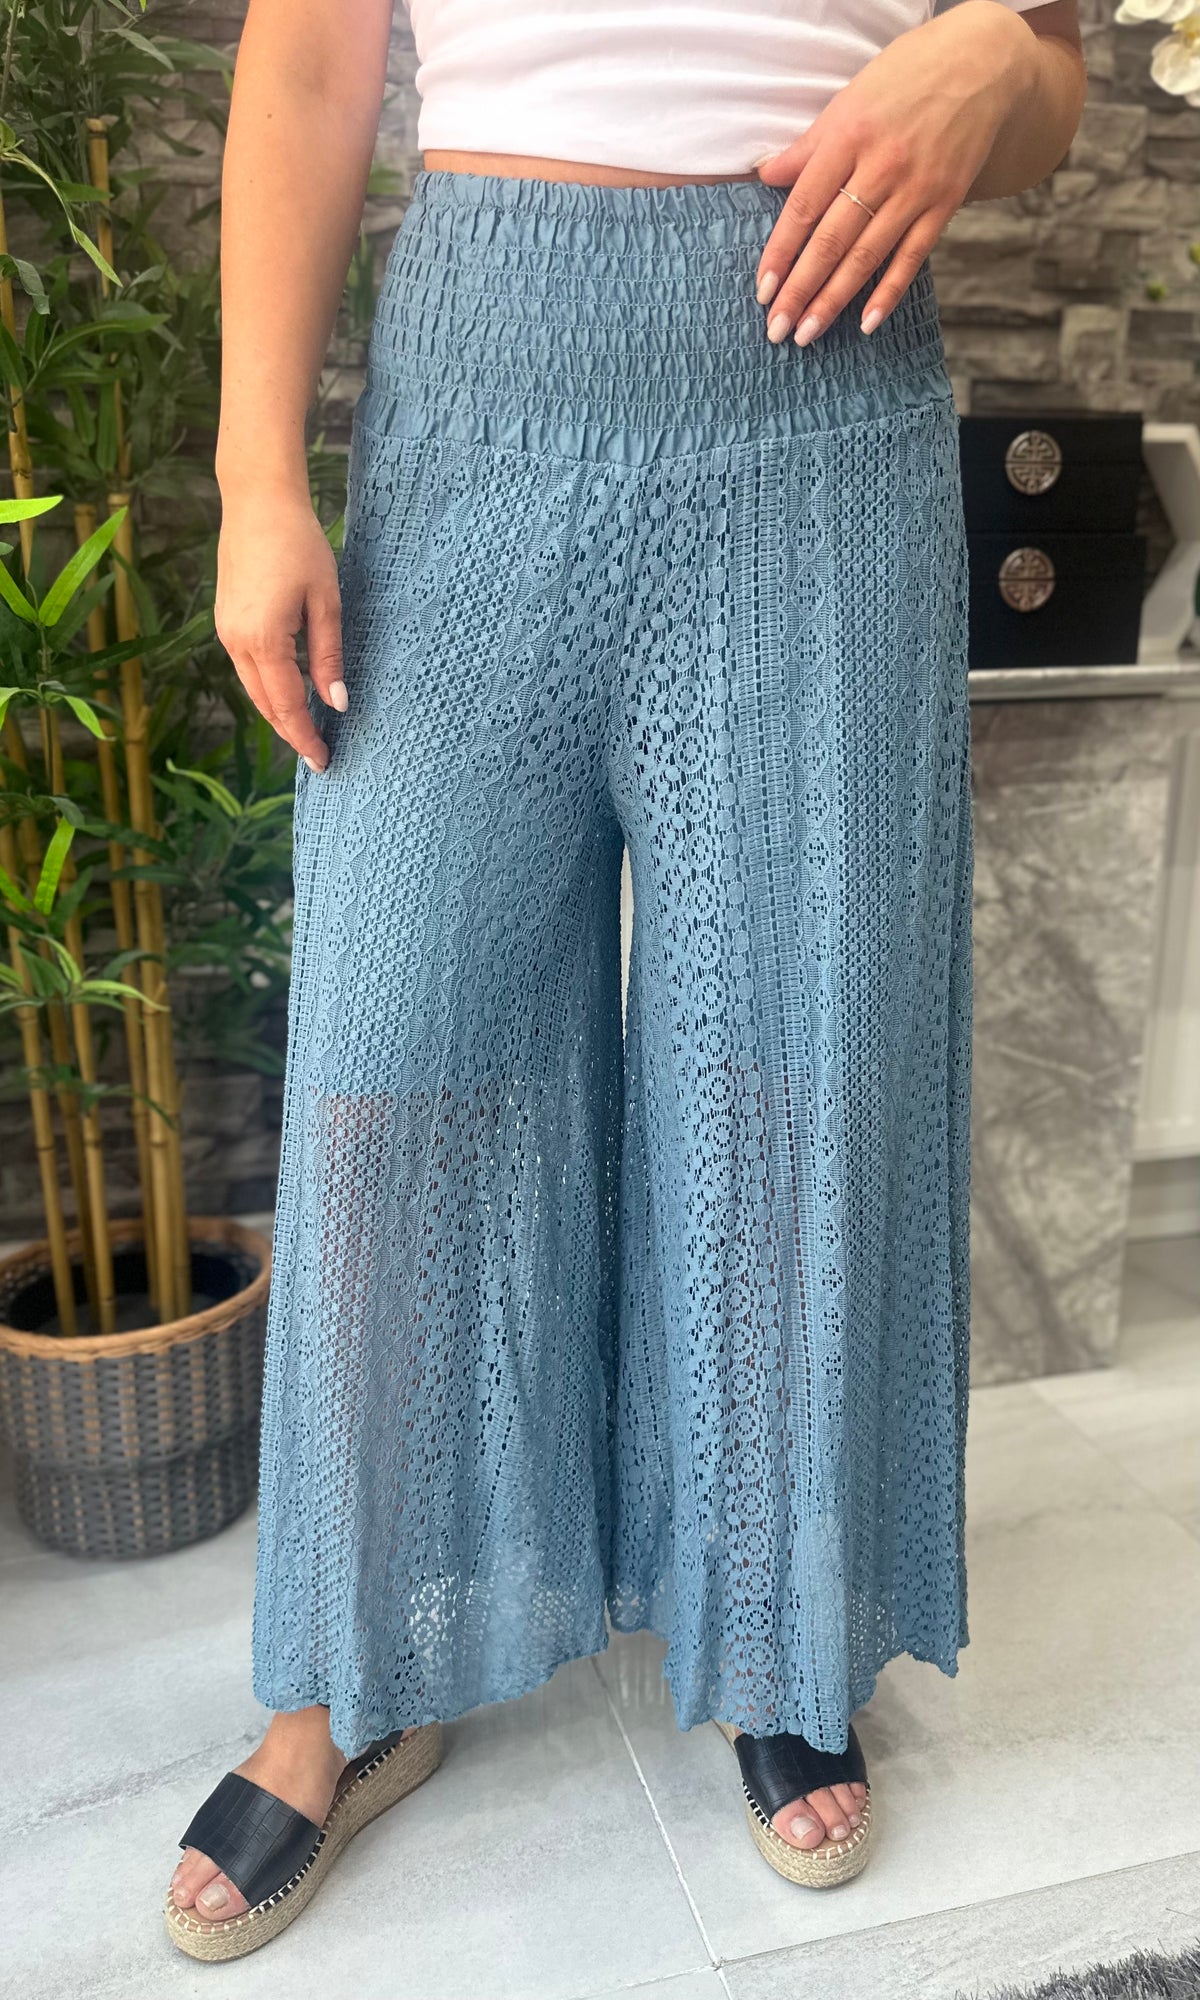 Made In Italy Rhianna Crotchet Trousers - Denim Blue